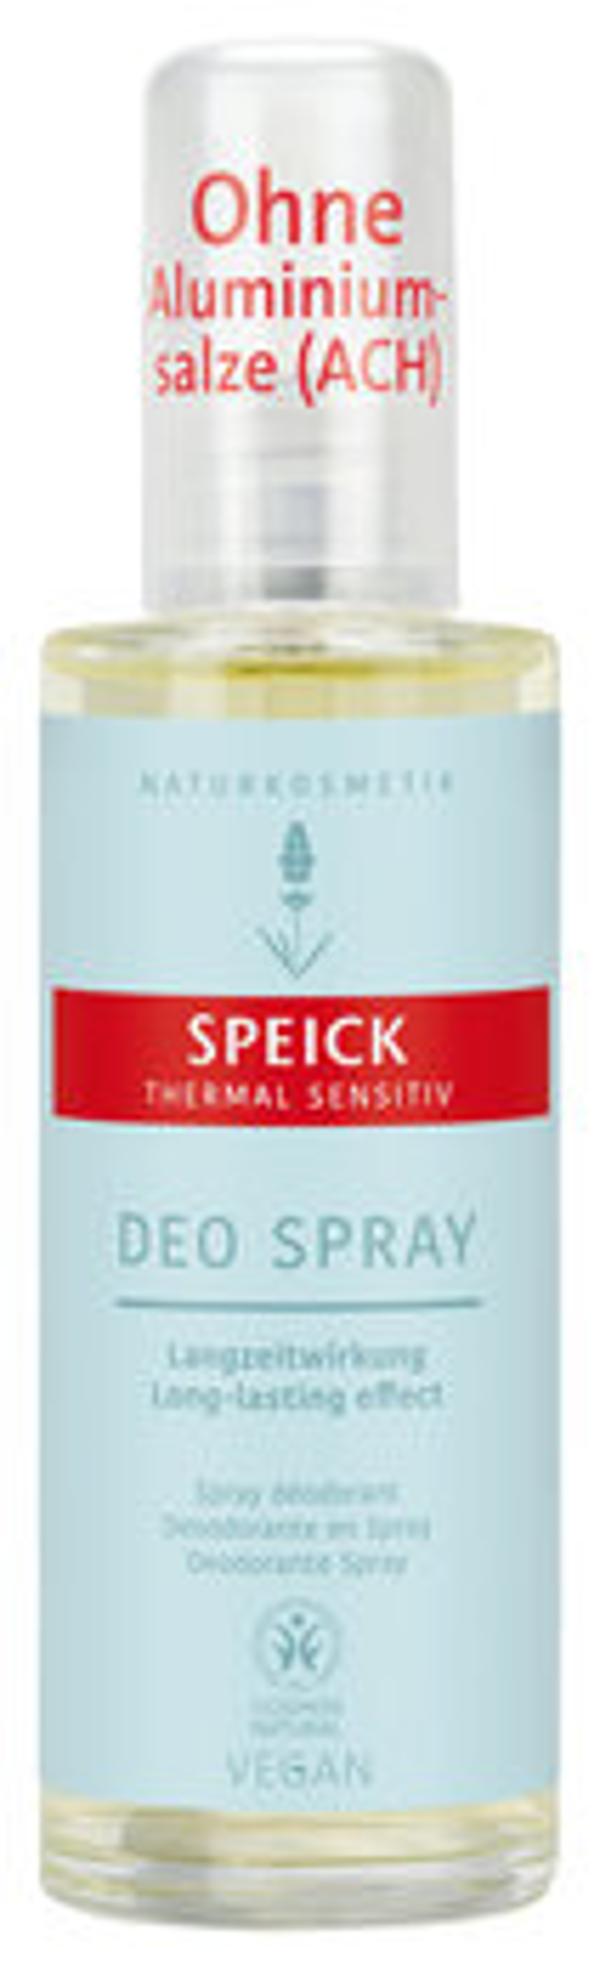 Produktfoto zu Thermal Sensitiv Deo Spray